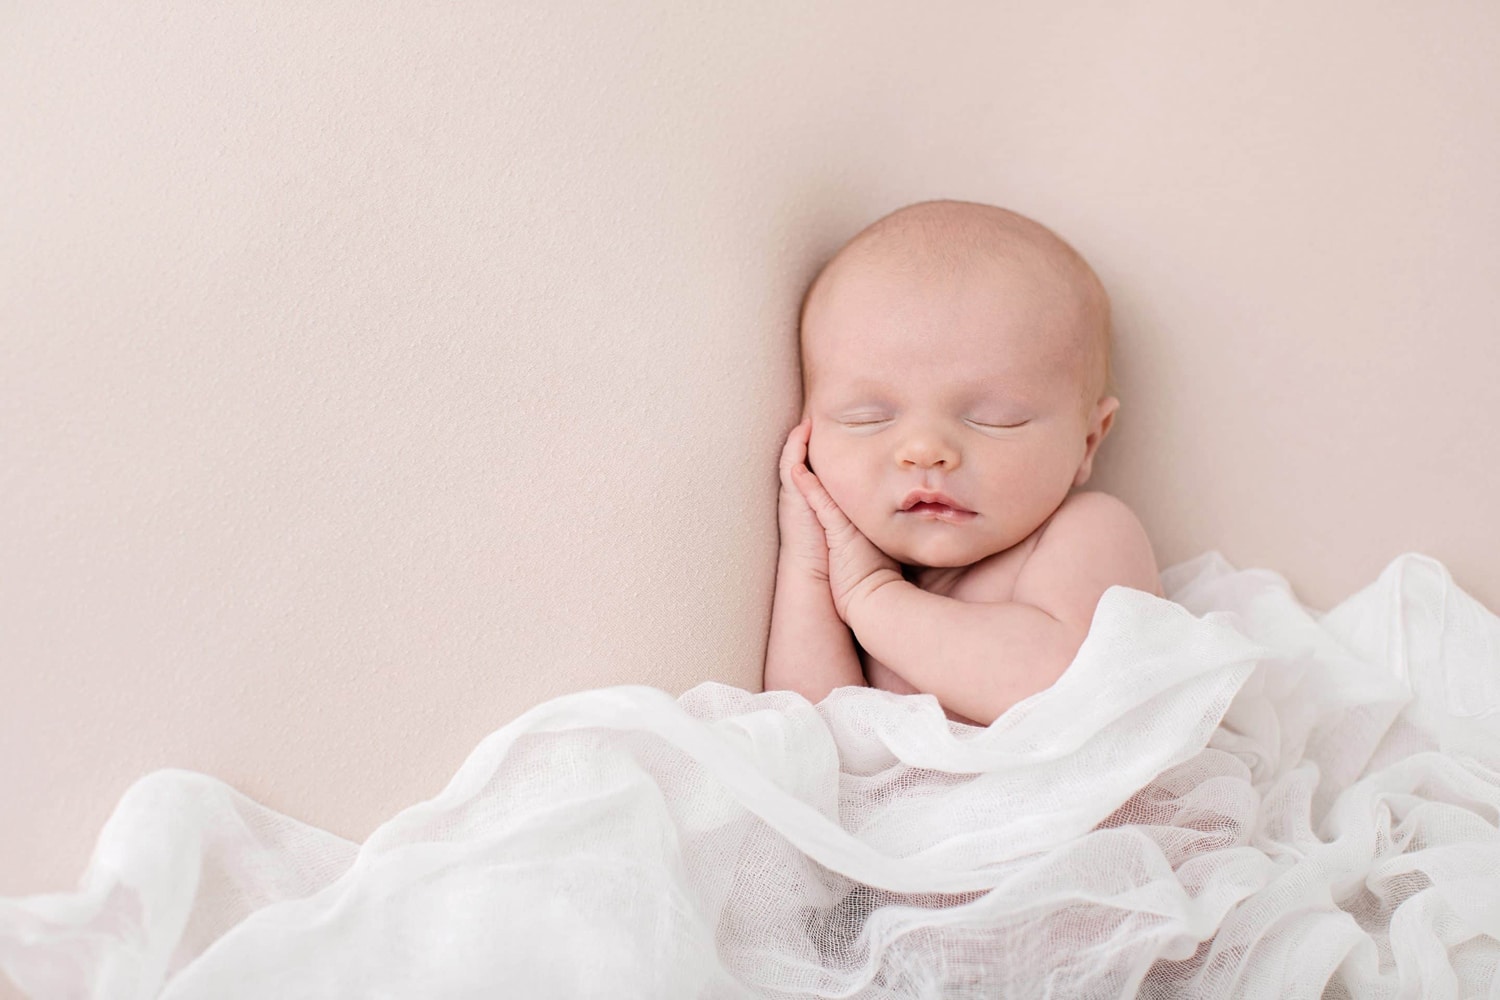 A newborn baby sleeps on a white background.